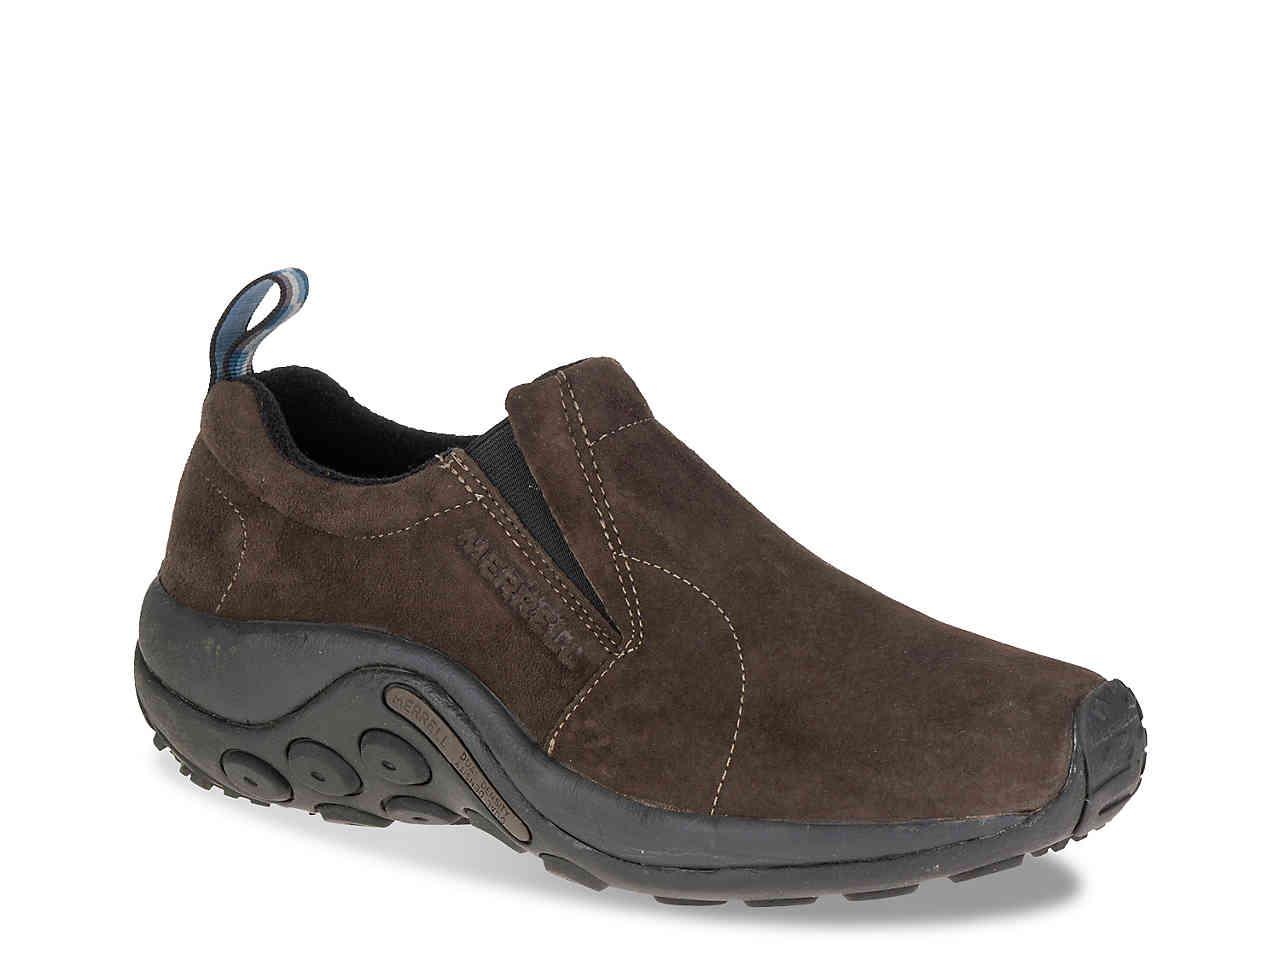 Merrell Jungle Moc Slip-on Trail Shoe in Brown for Men - Lyst